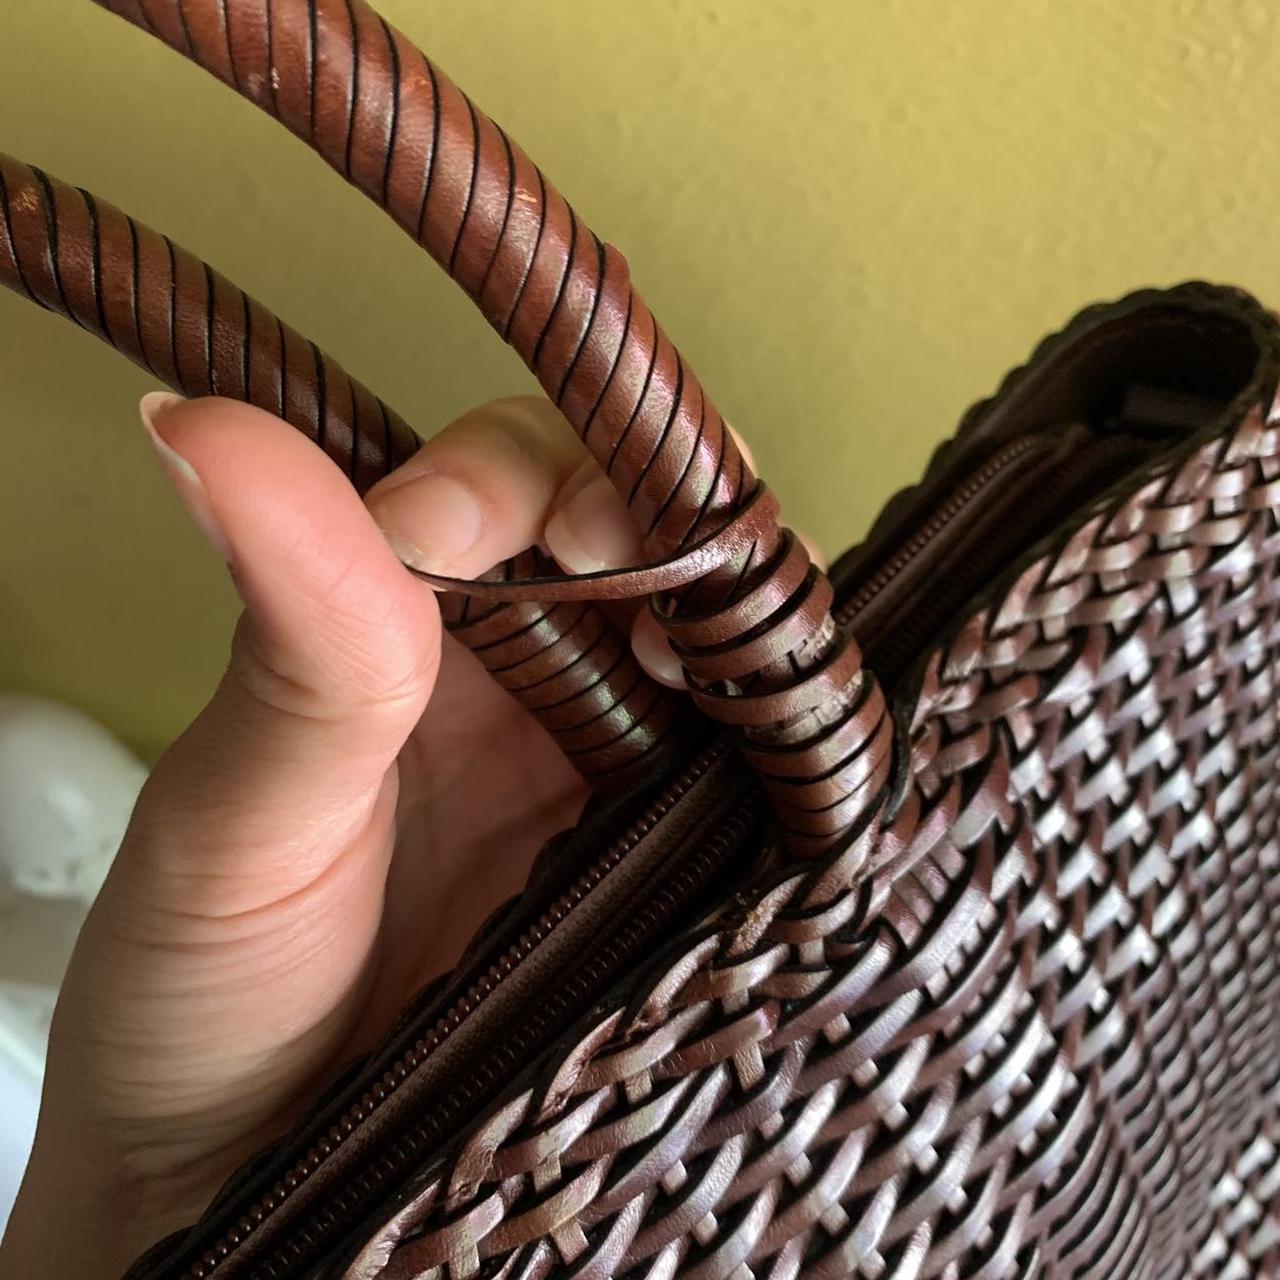 90s black leather bag braided straps genuine leather - Depop